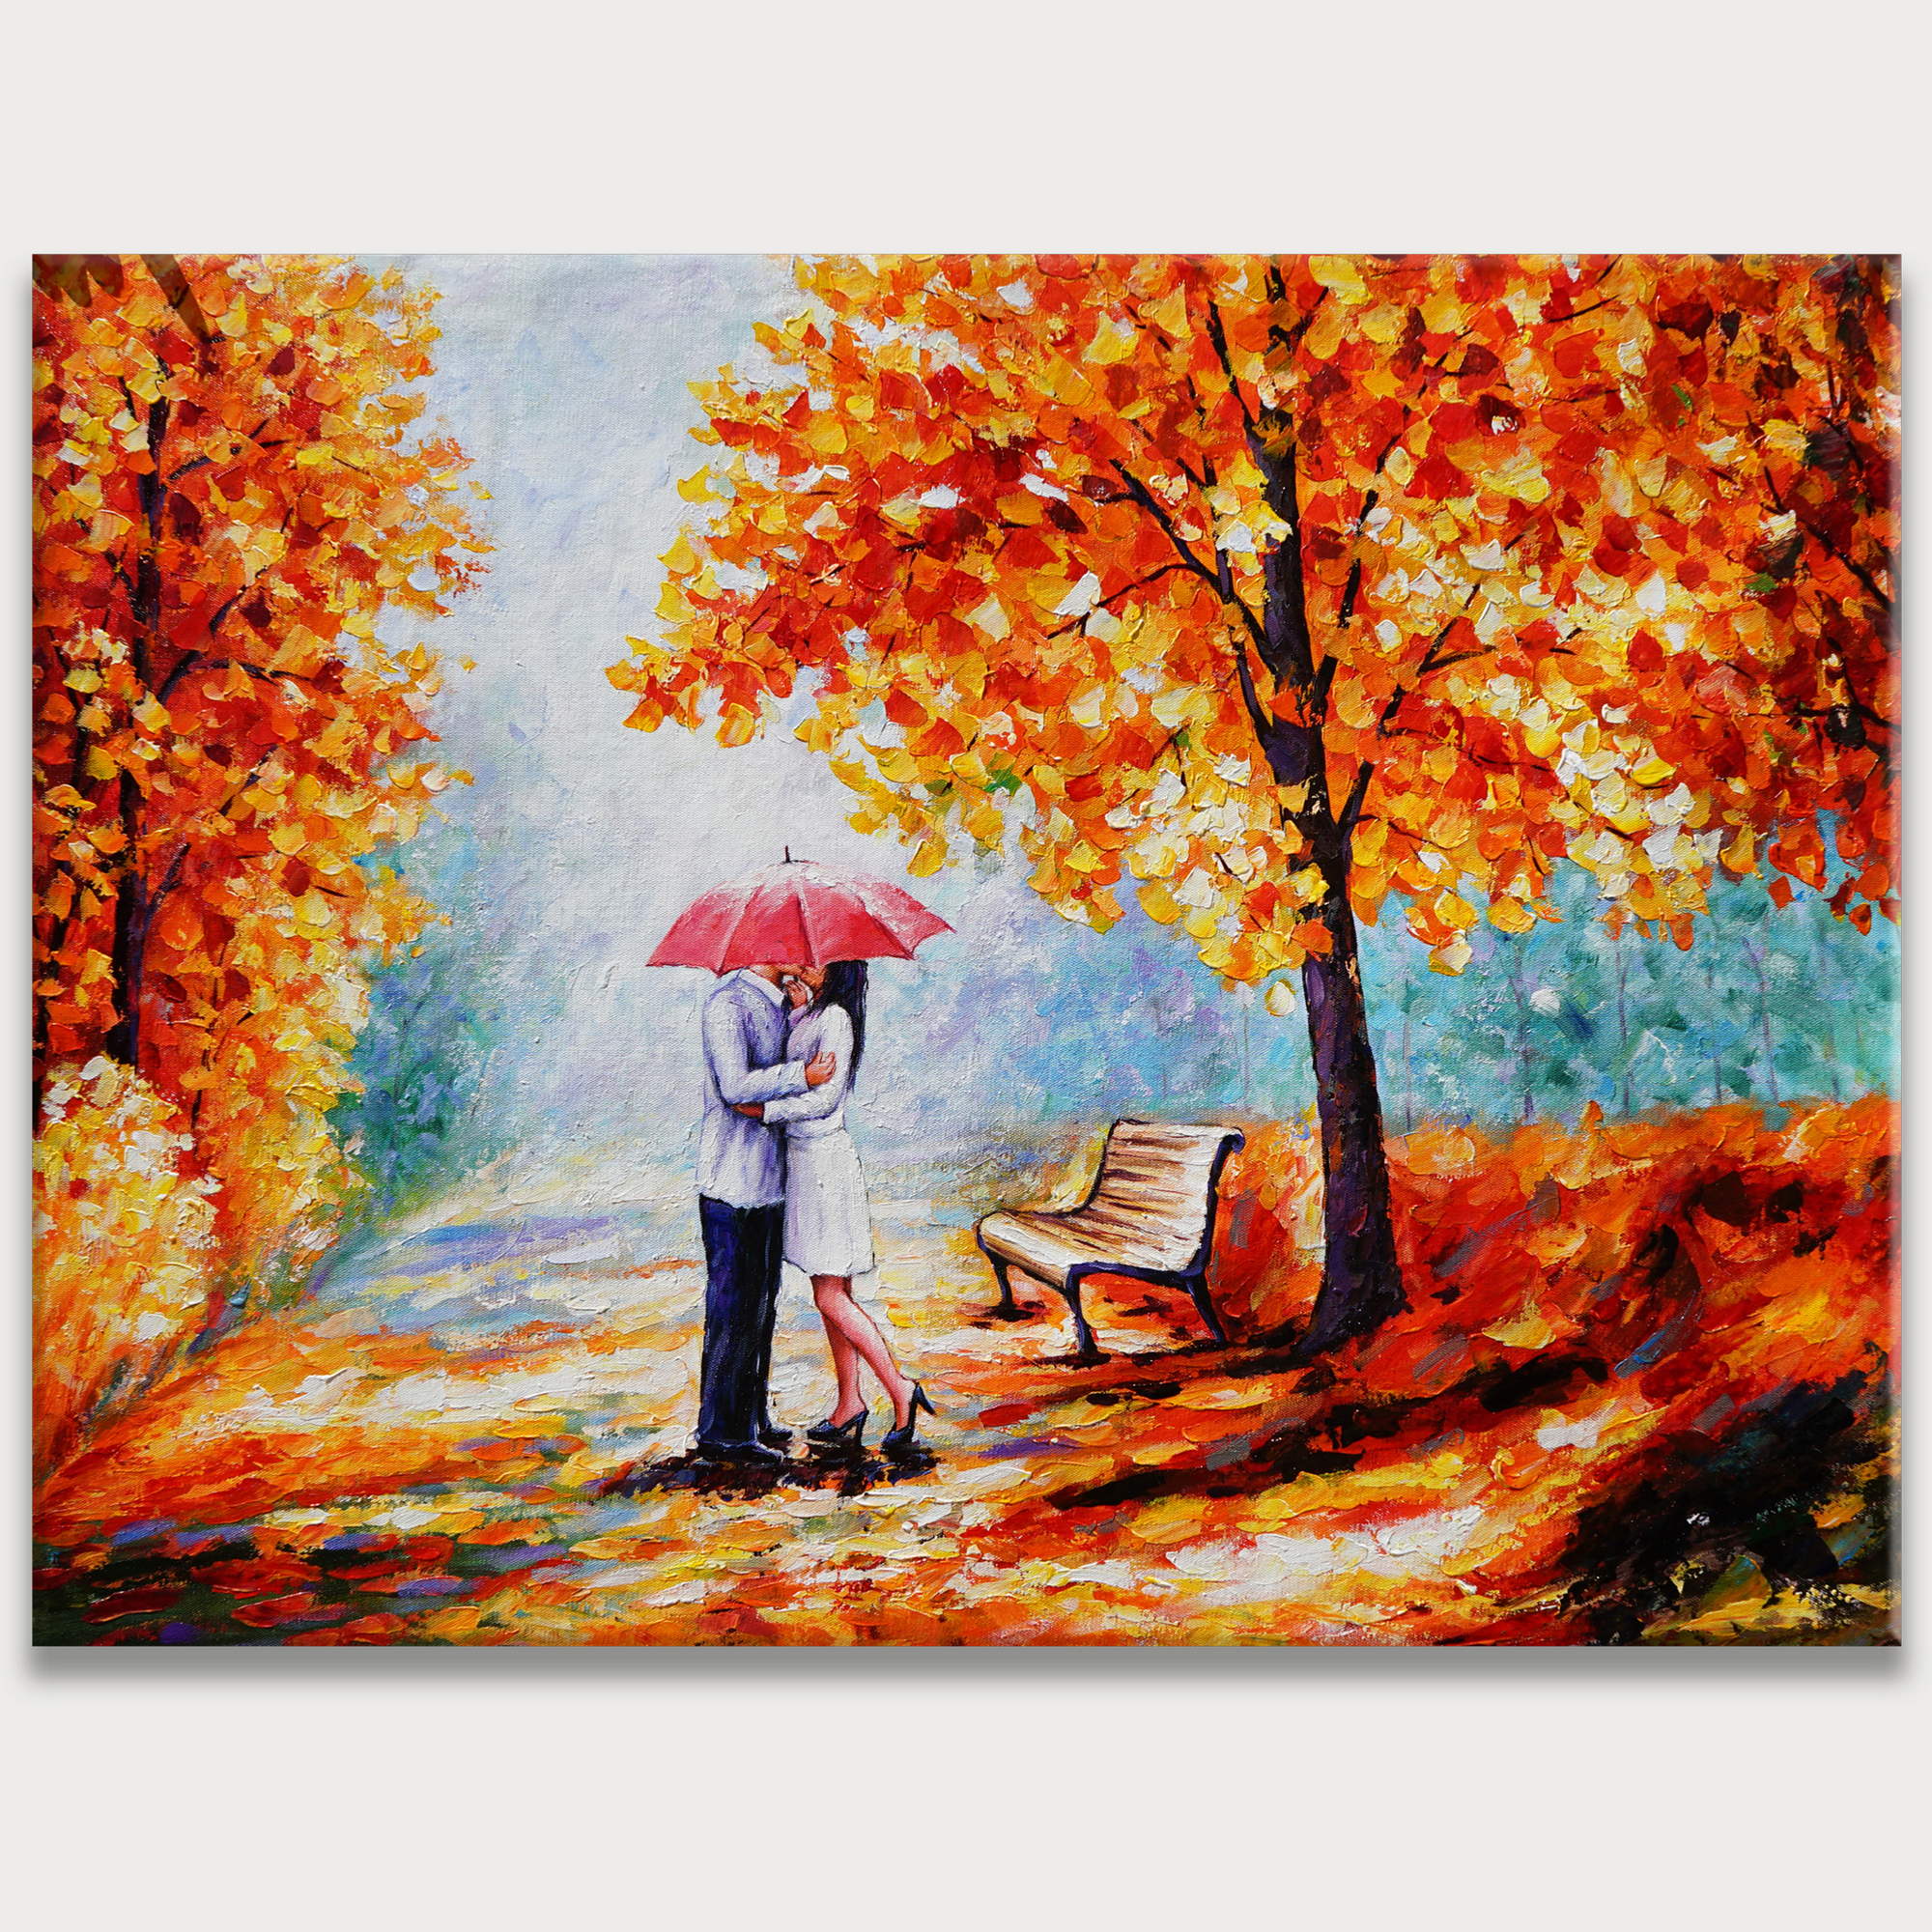 Hand painted Romance in the autumn rain 75x100cm